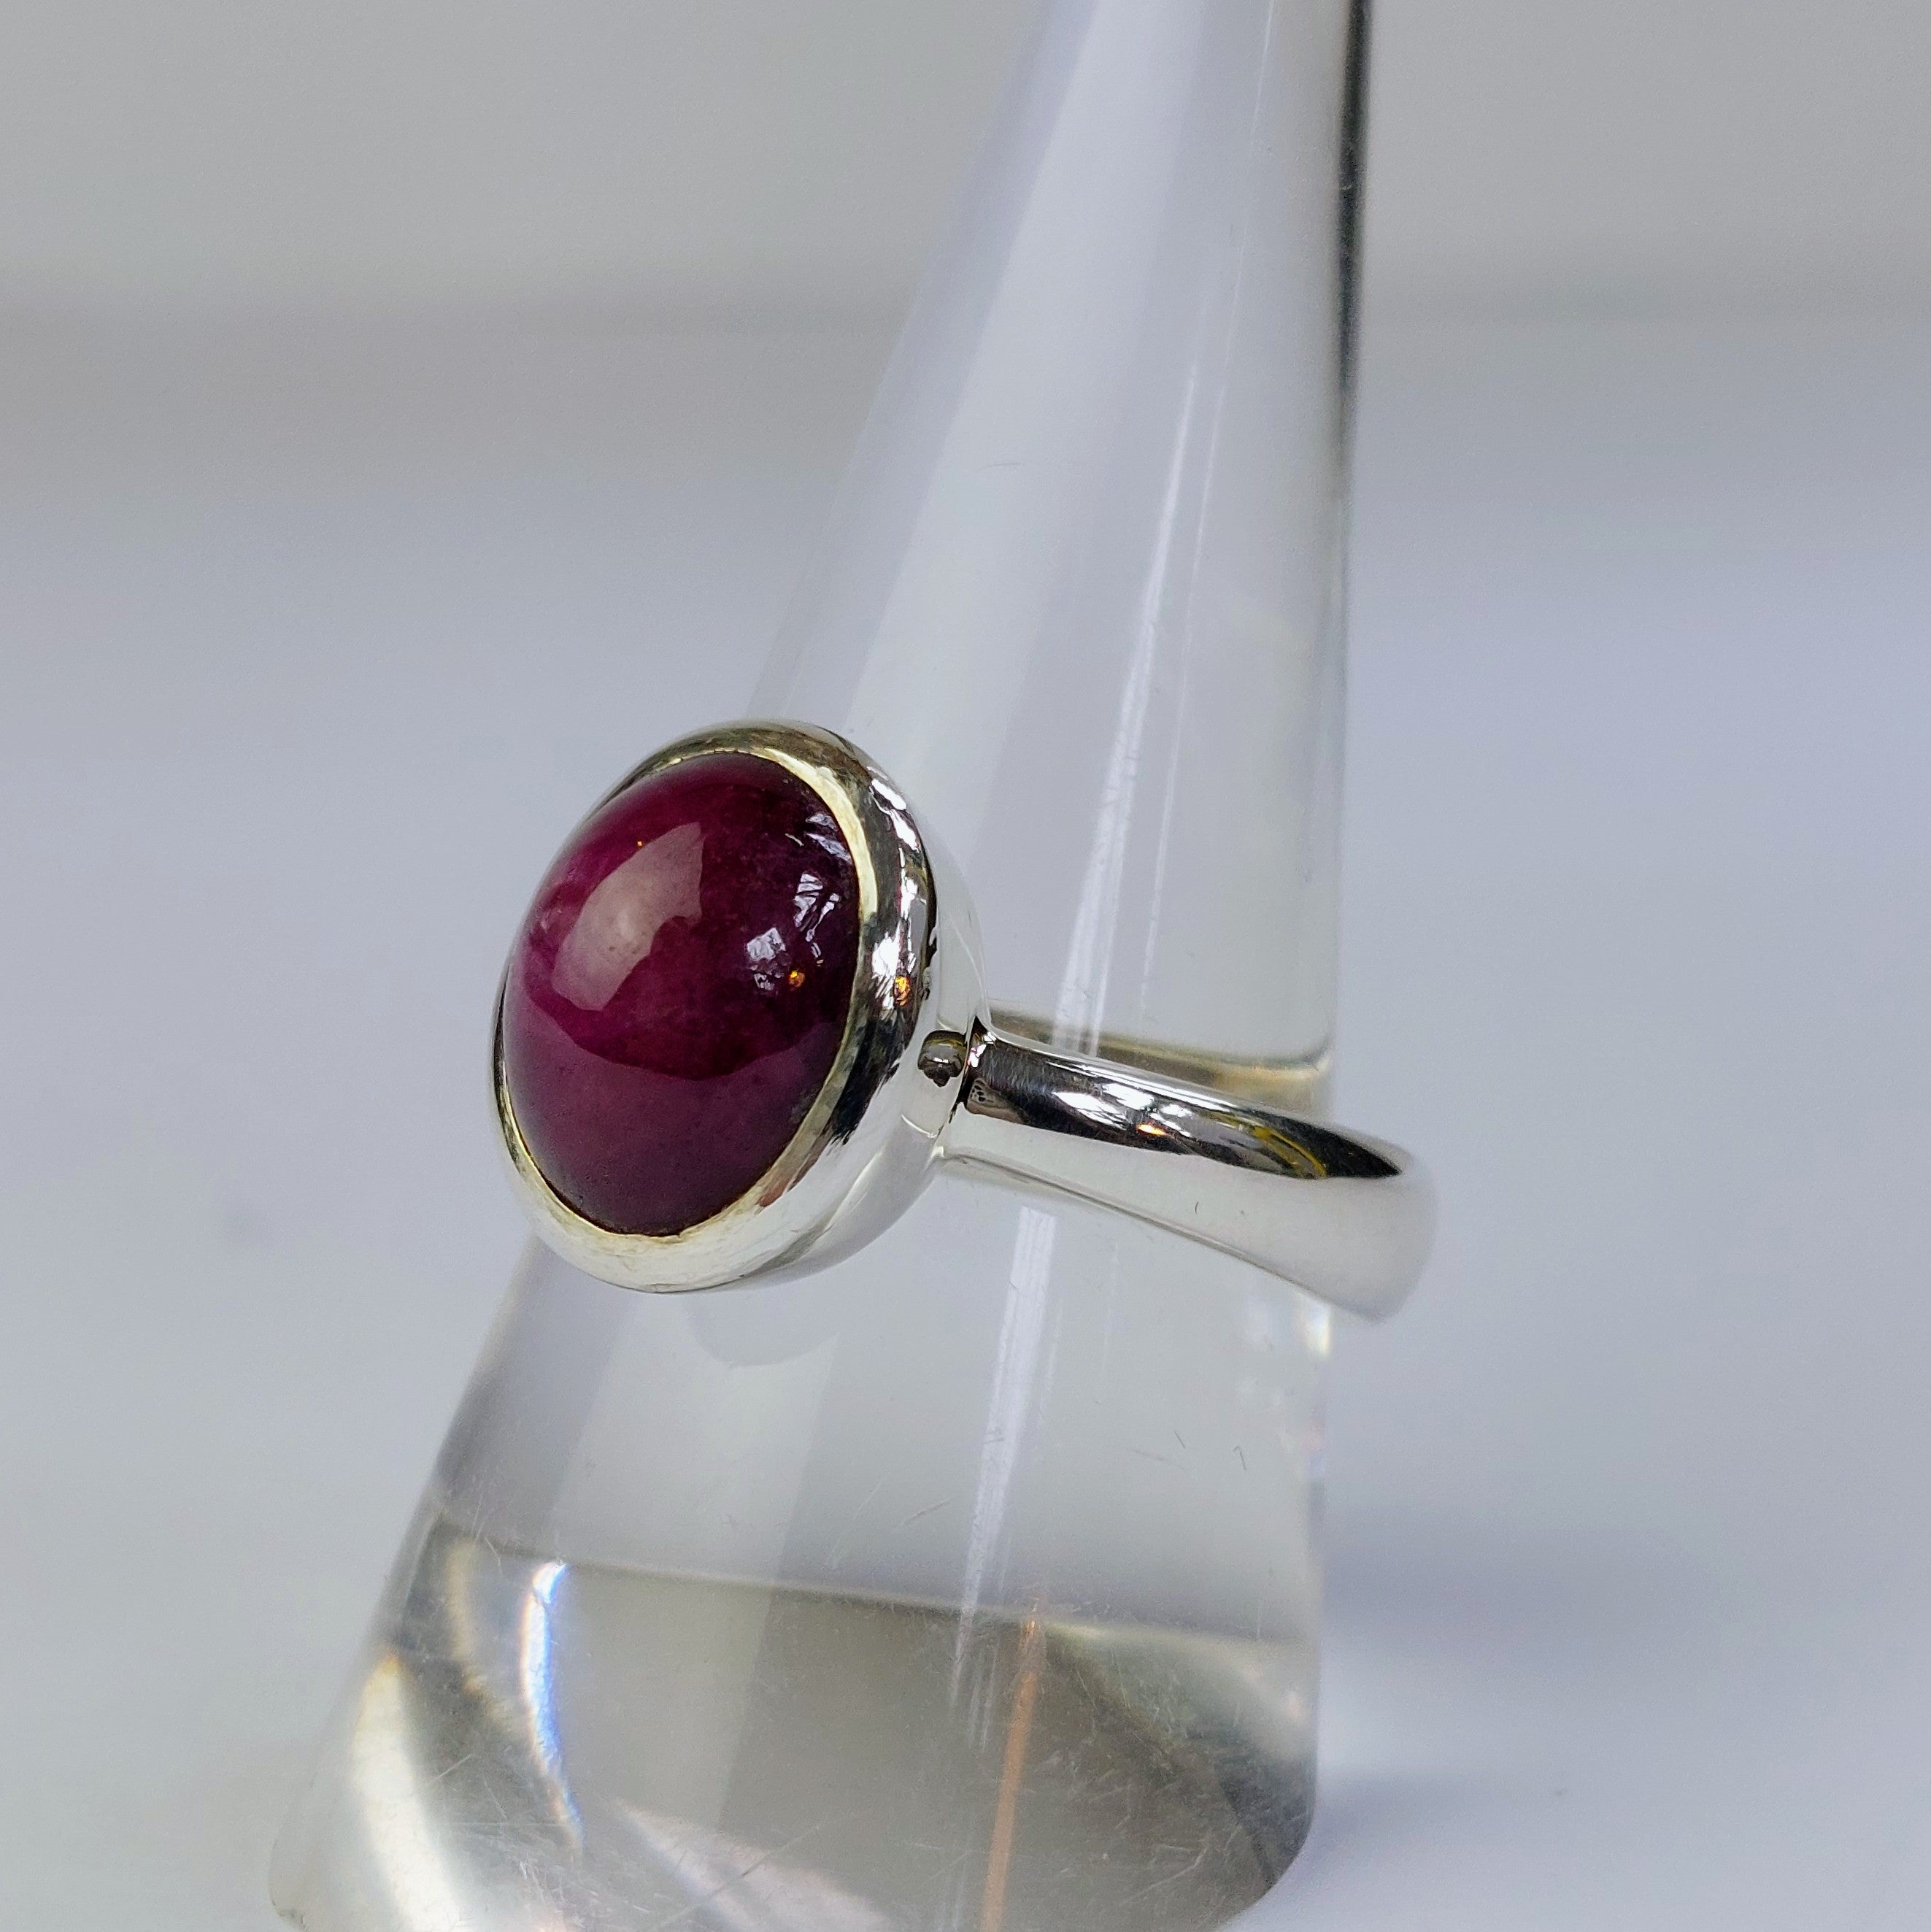 Star Ruby Ring - The Nancy Smillie Shop - Art, Jewellery & Designer Gifts Glasgow